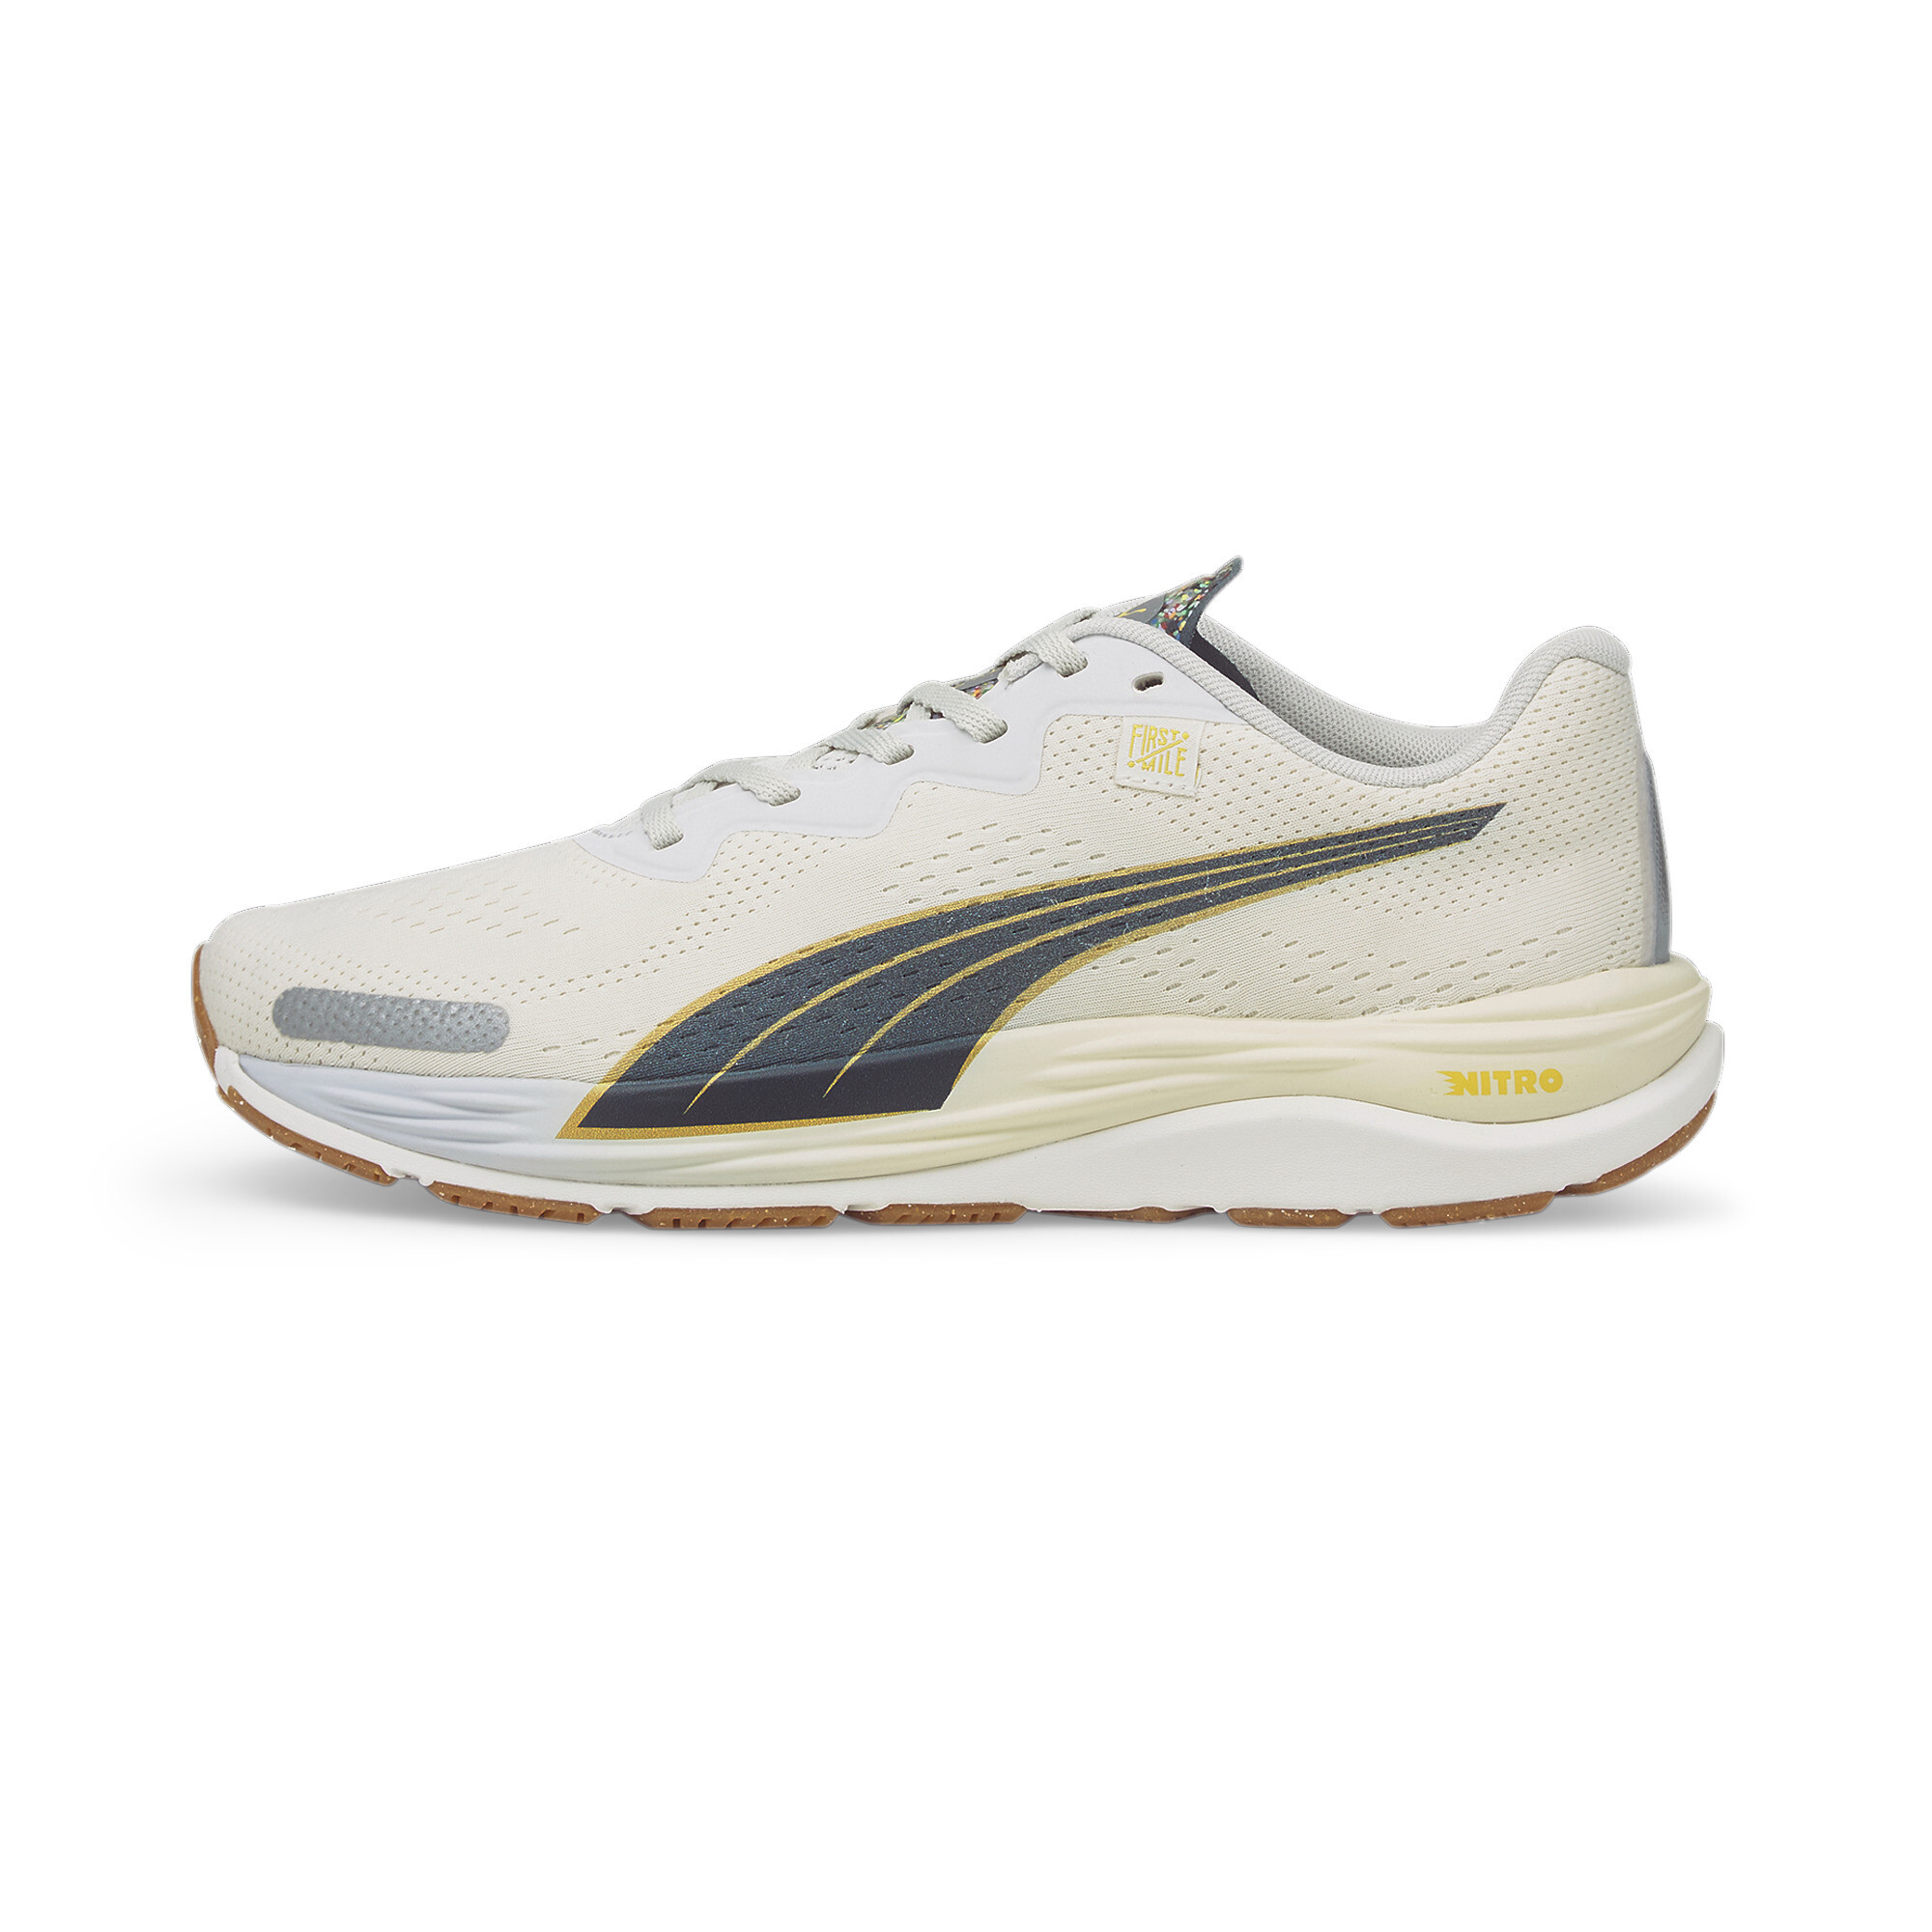 puma men's sports shoes online shopping